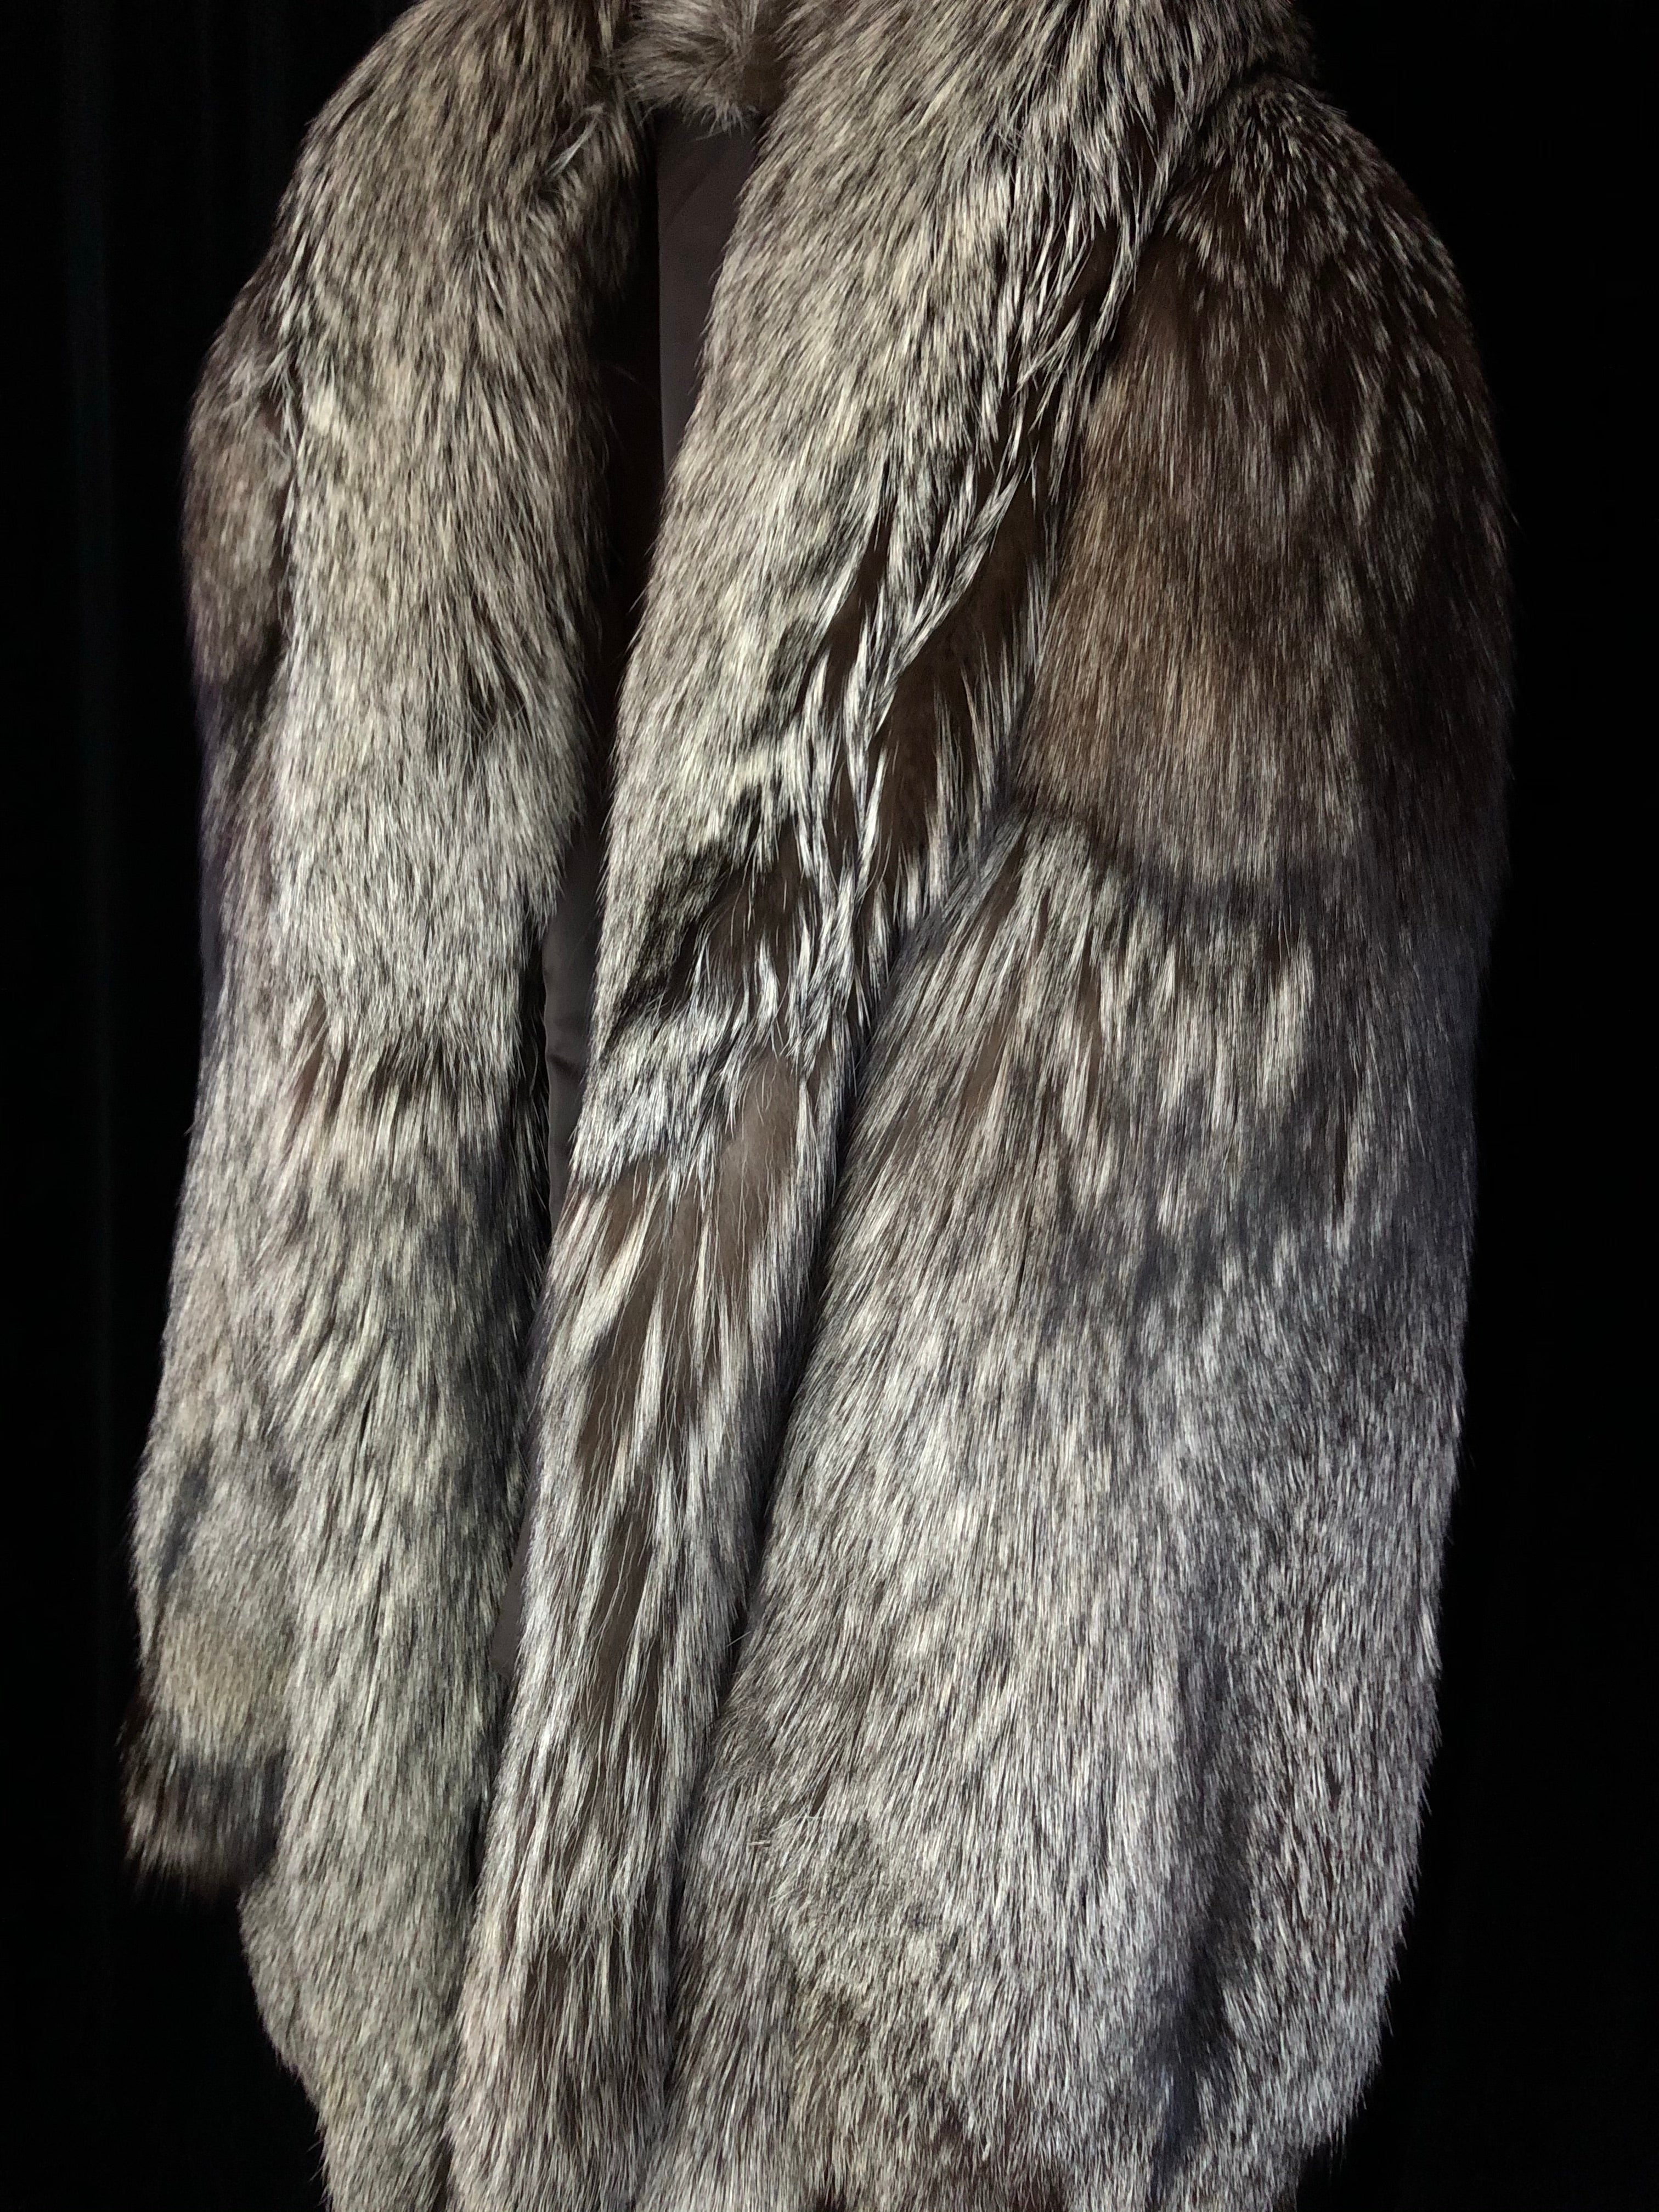 80’s Vintage NOS Silver Fox Fur Made in Argentina